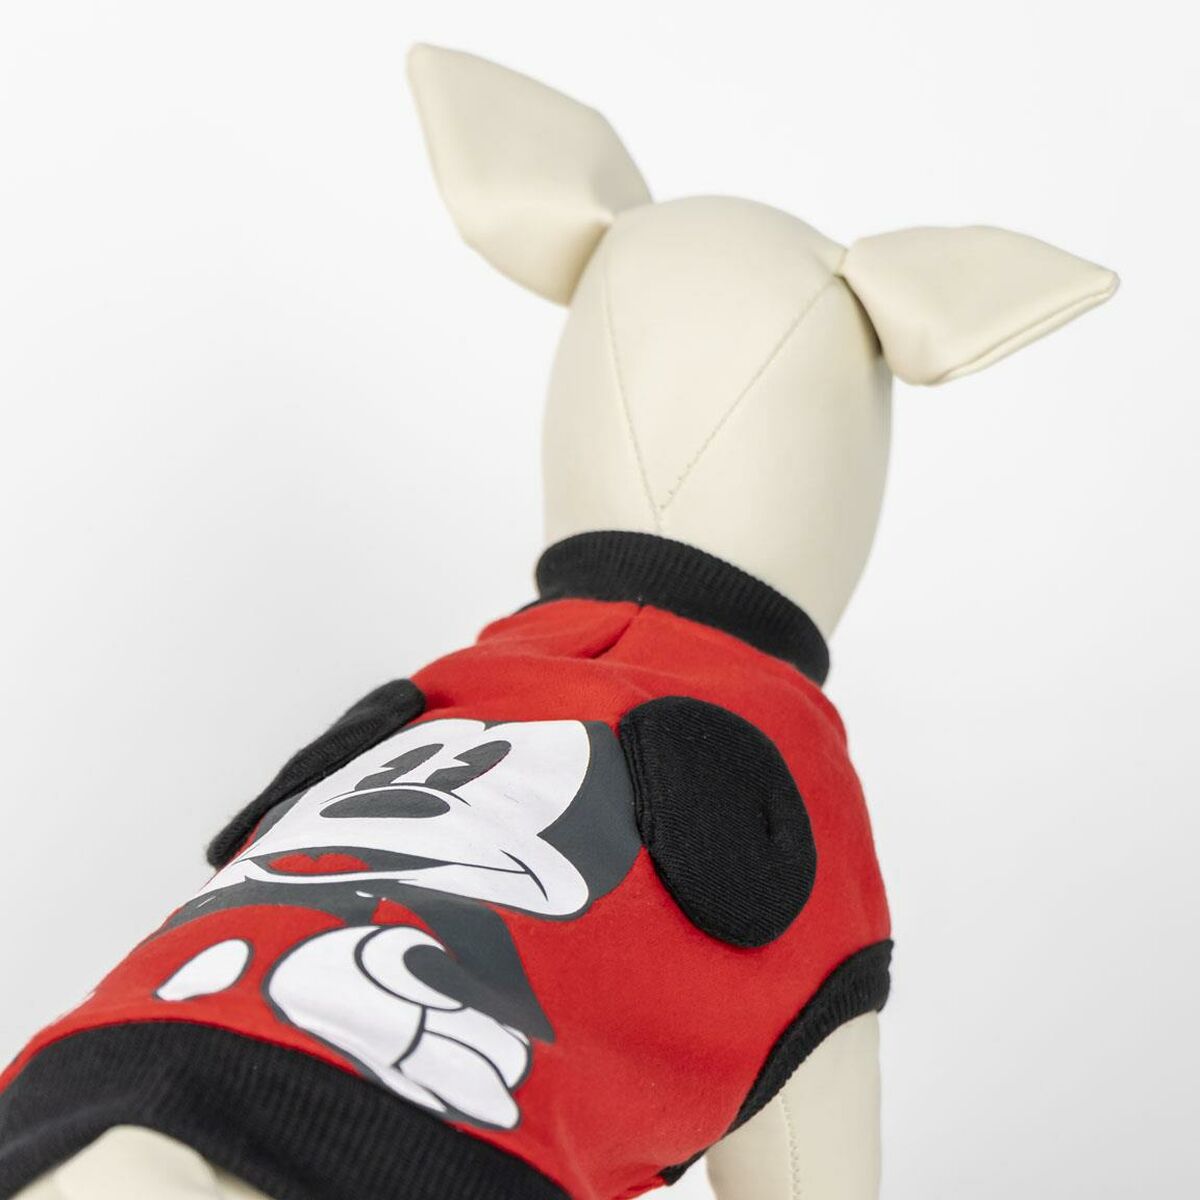 Hundepulli Mickey Mouse XXS Rot